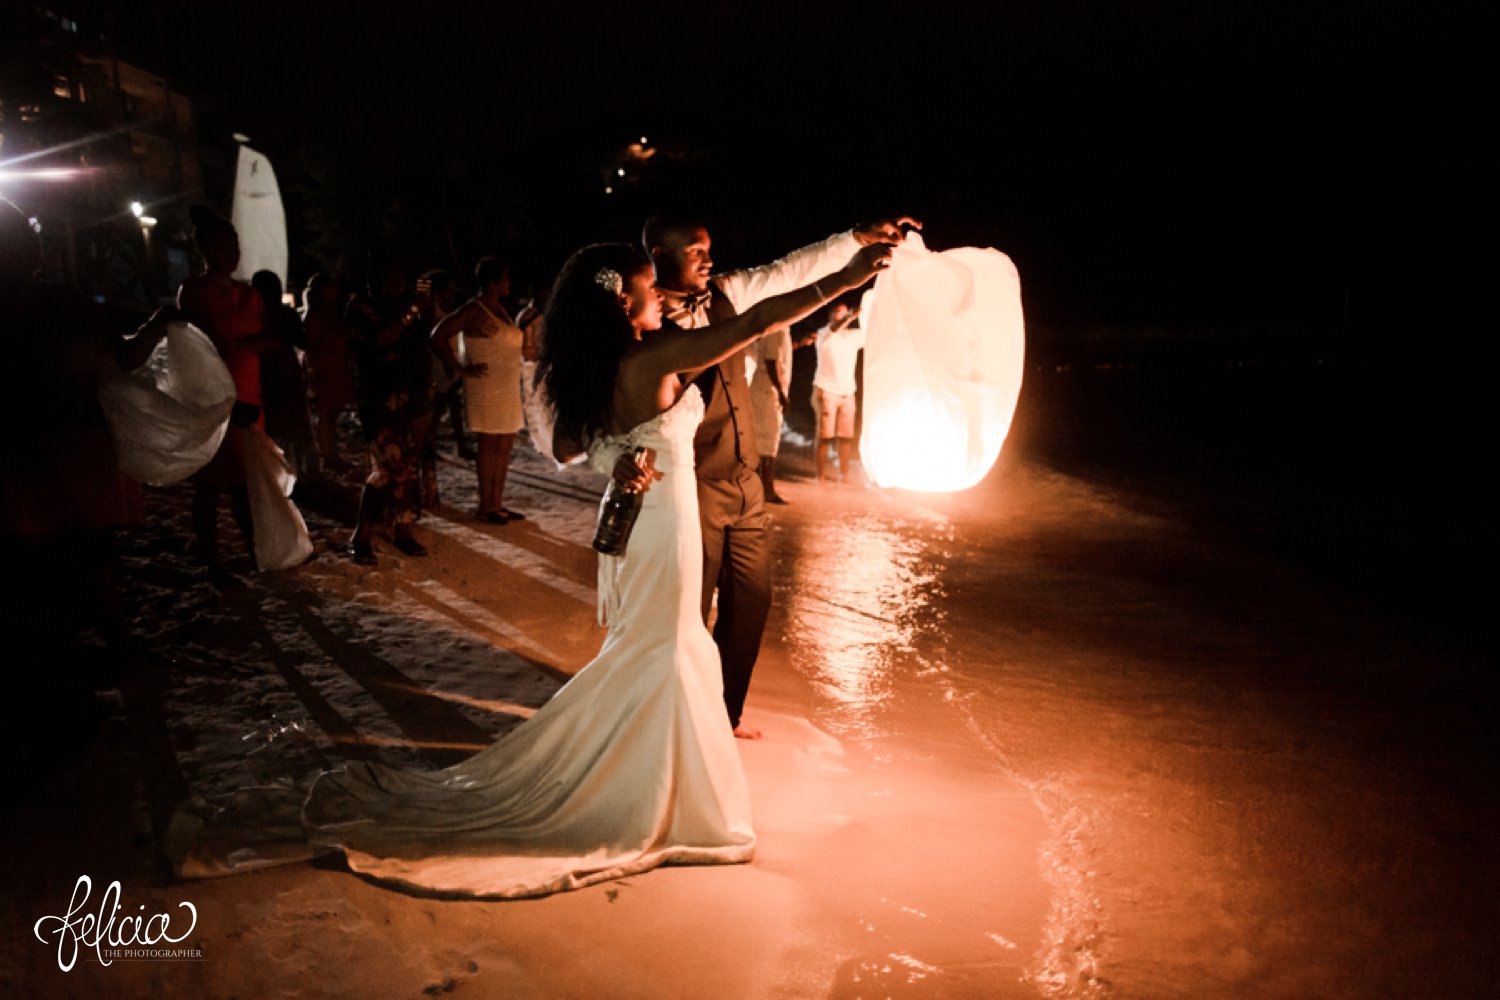   images by feliciathephotographer.com | destination wedding photographer | st lucia | l&s travel | the Royalton | reception | details | floating lanterns | romantic | love letters | night on the beach | 